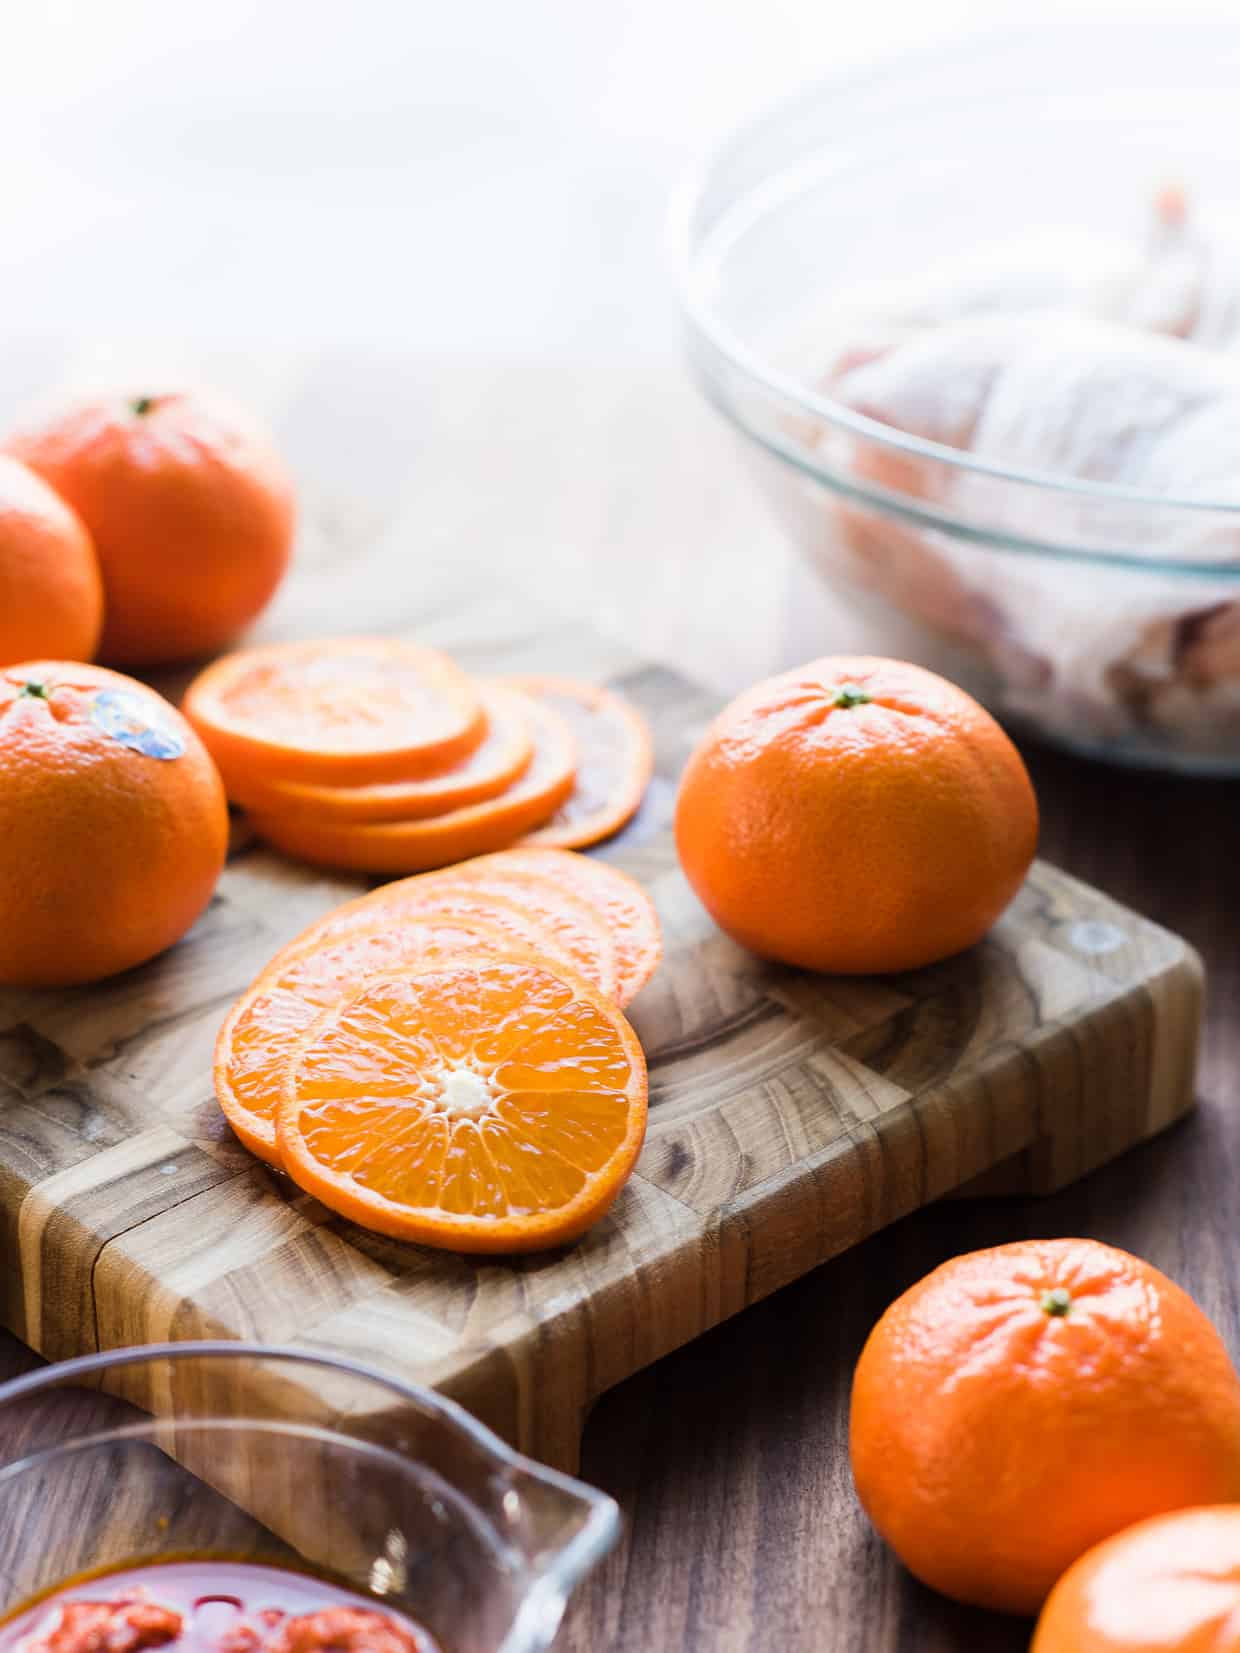 Slices of mandarin oranges on a cutting board.